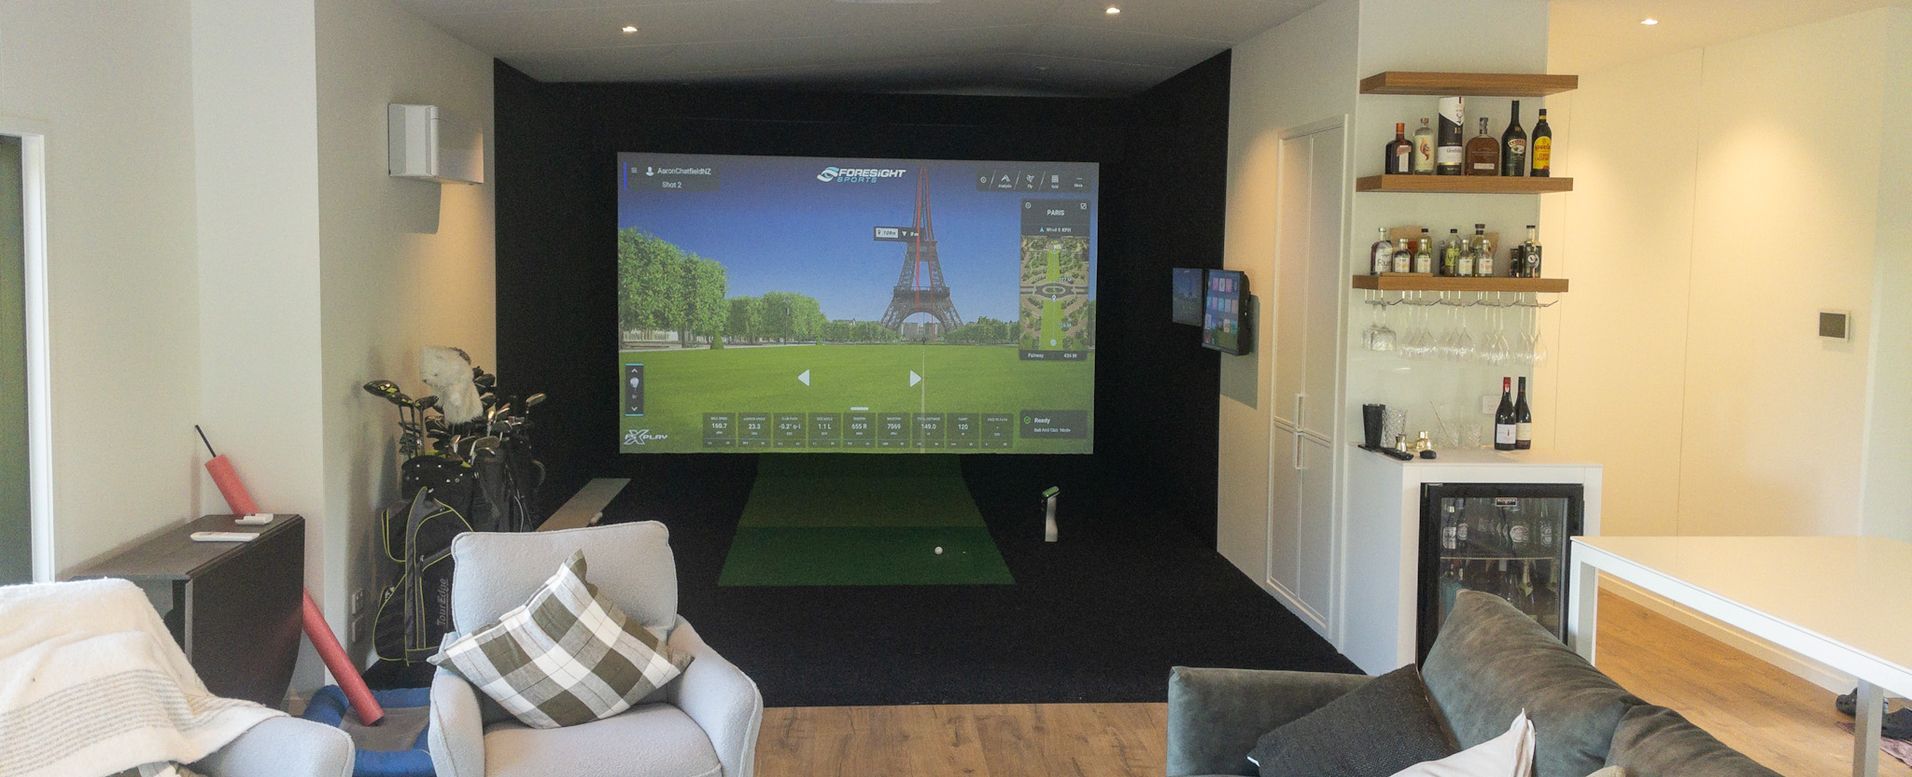 Premium Golf Simulators Banner image